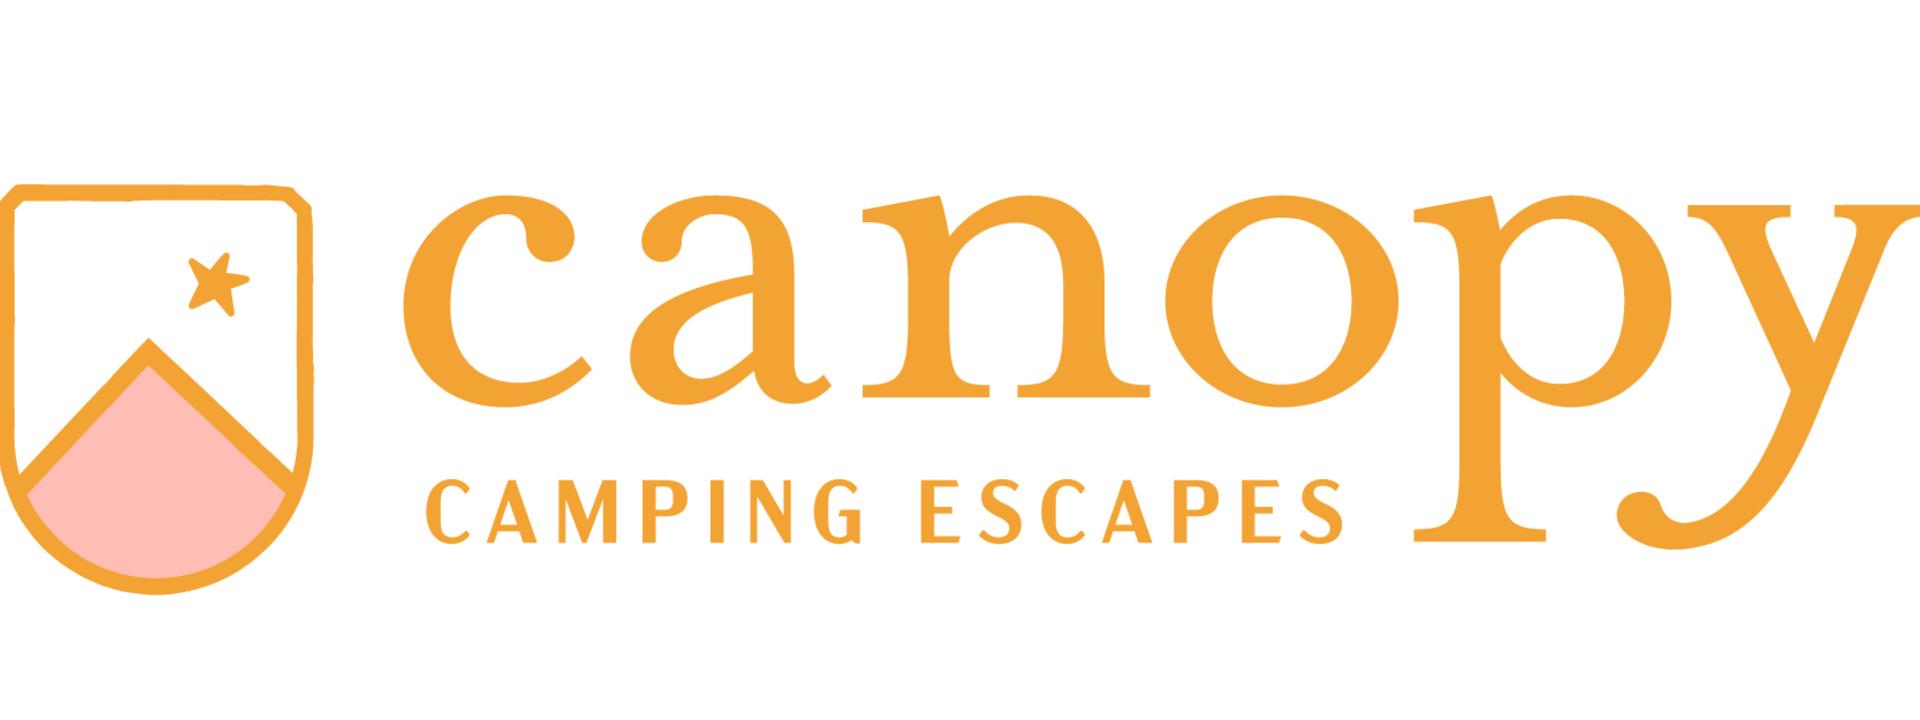 Gold Canopy Camping Escape Logo 500px JPG.jpg